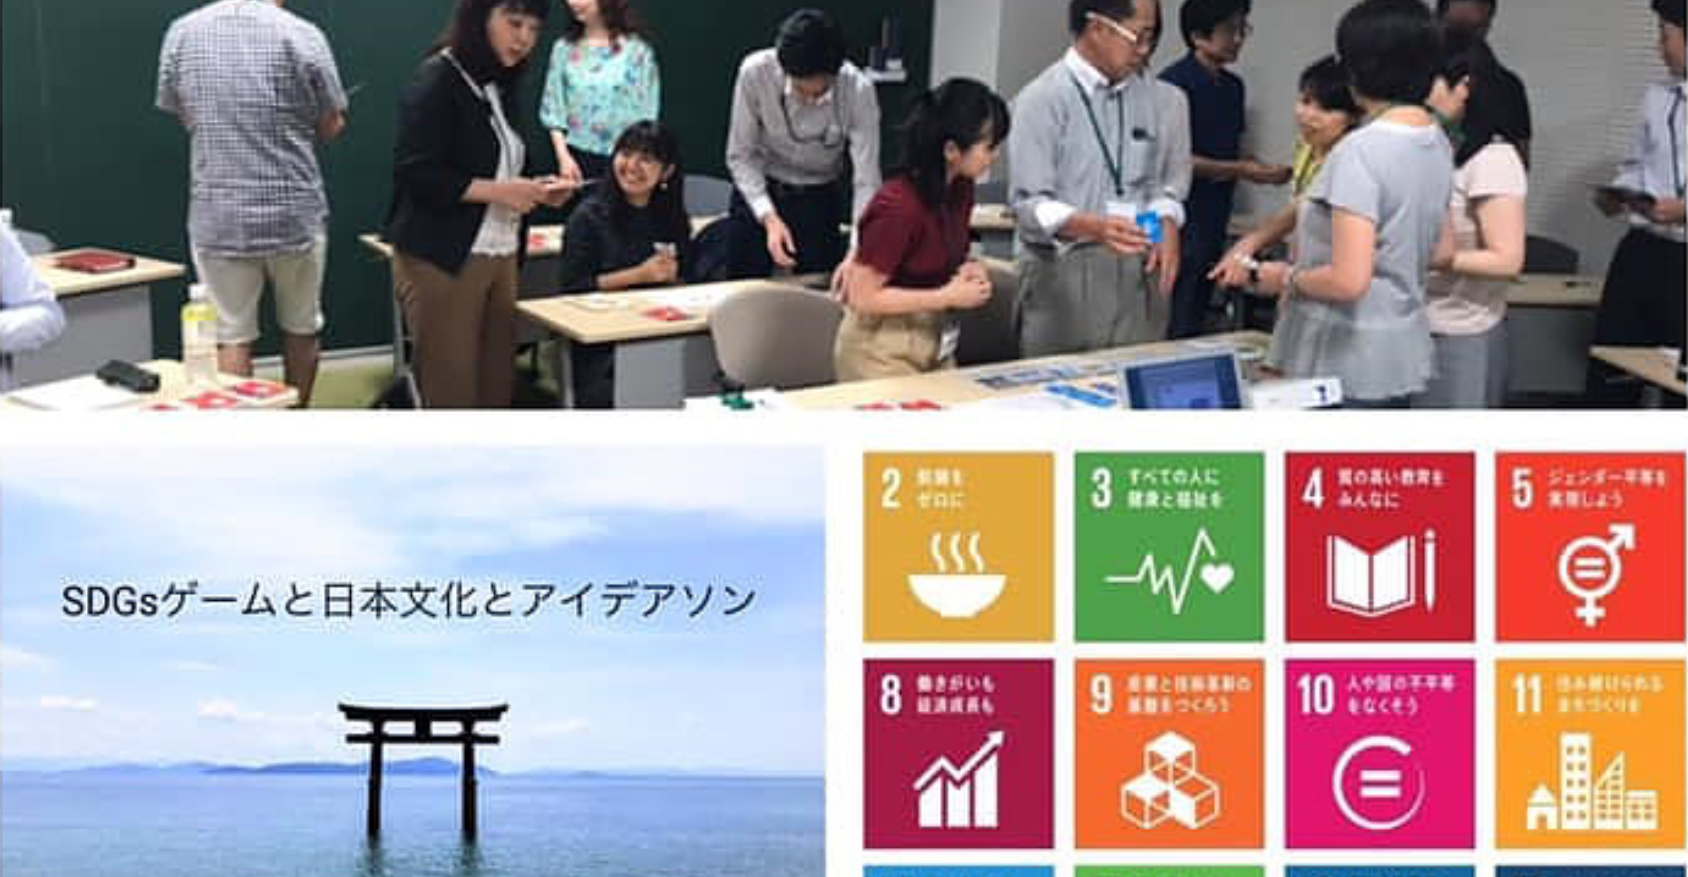 SDGsゲームと日本文化とアイデアソン～既にある強みを活かした持続可能なビシネスと社会づくり